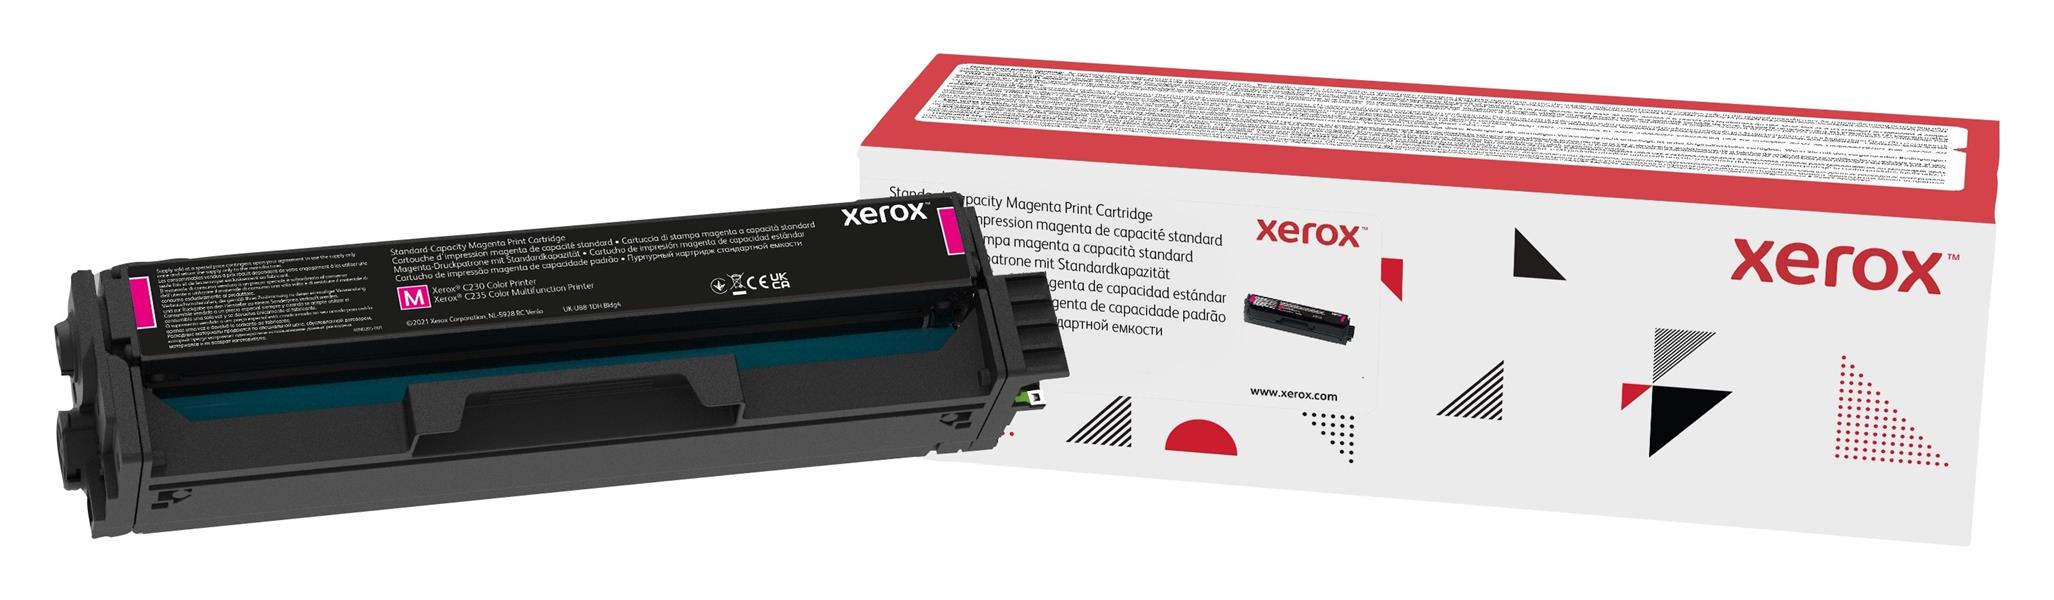 Xerox C230/C235 standaard capaciteit tonercassette, magenta (1.500 paginas)